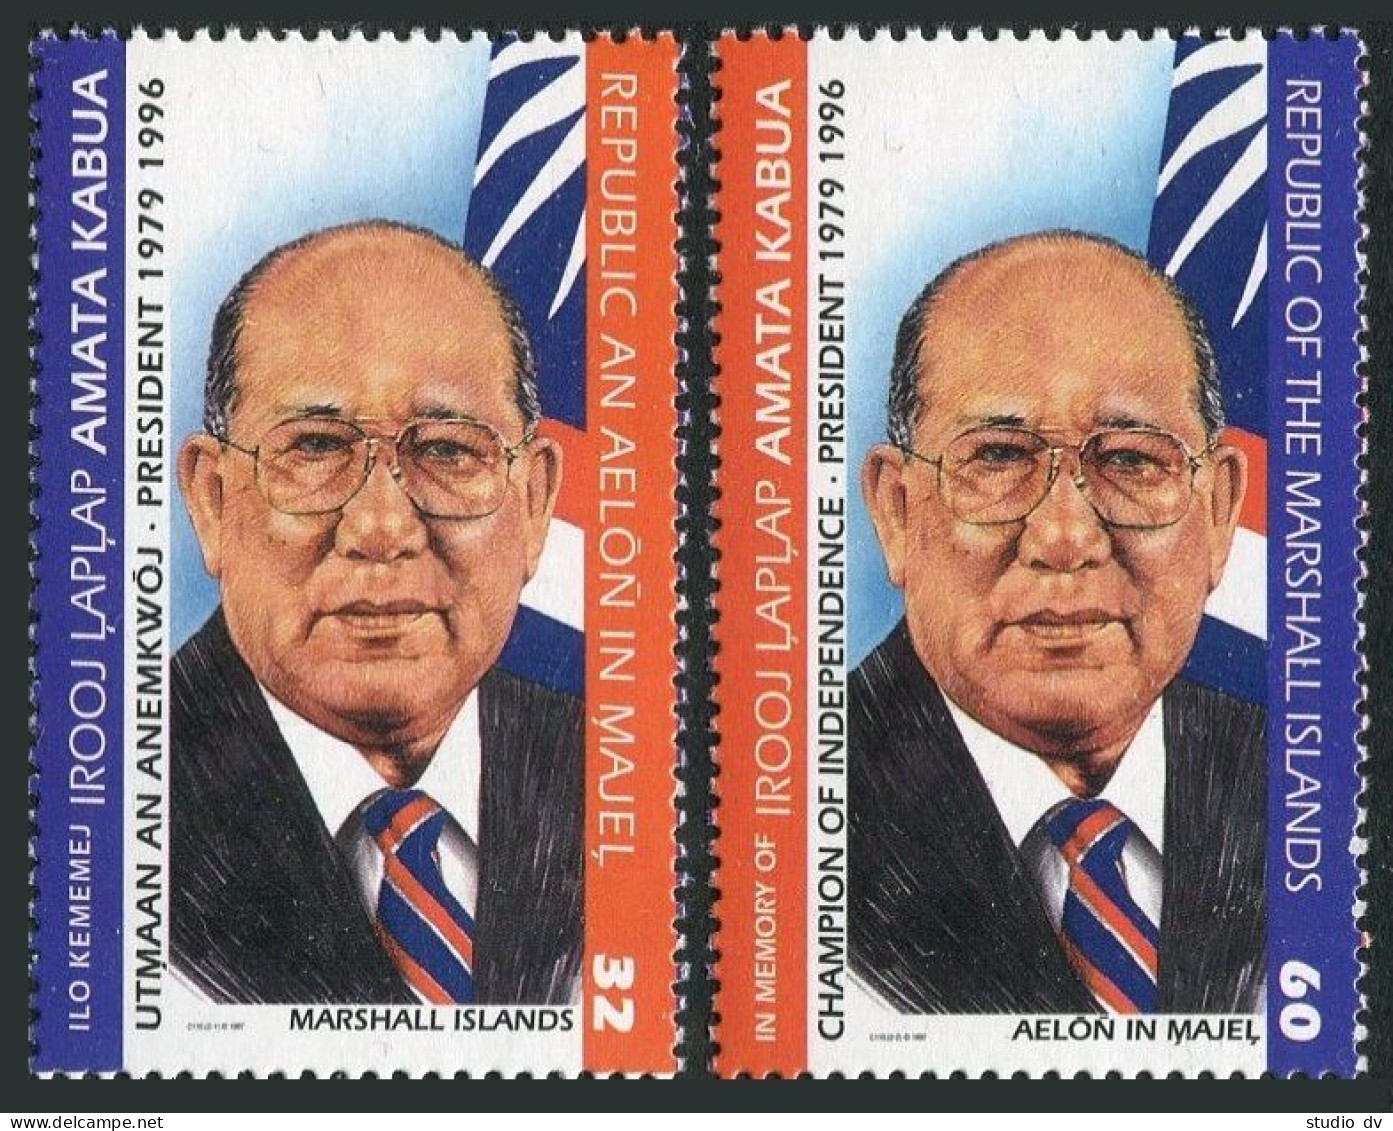 Marshall 620-621,MNH.Michel 784-785. Amata Kabua,President,1997. - Islas Marshall